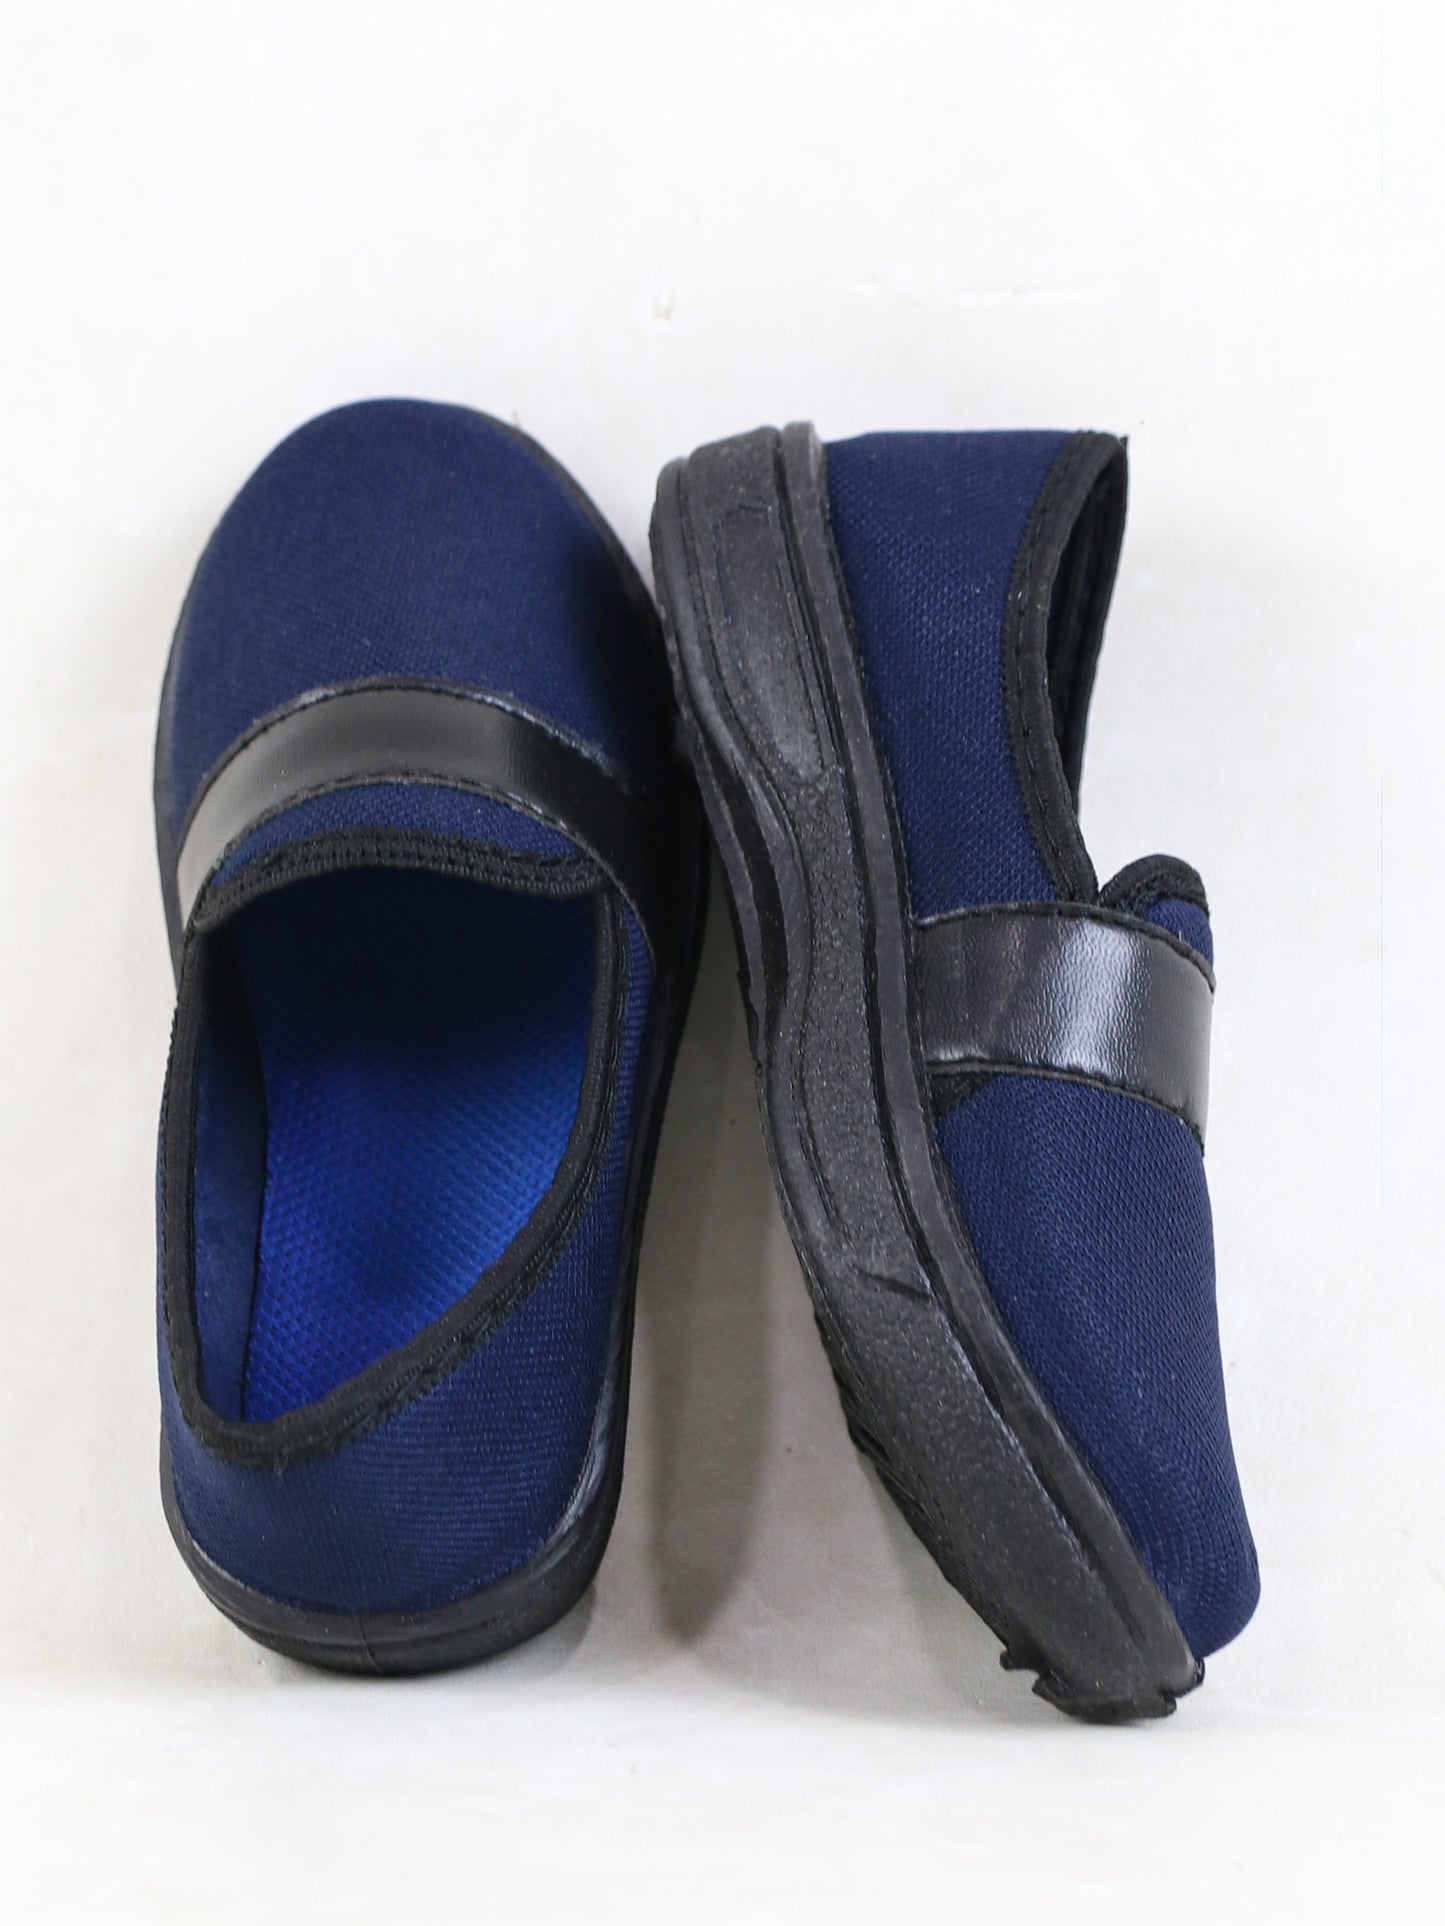 BS56 Boys Slip-On Shoes 5Yrs - 8Yrs Blue